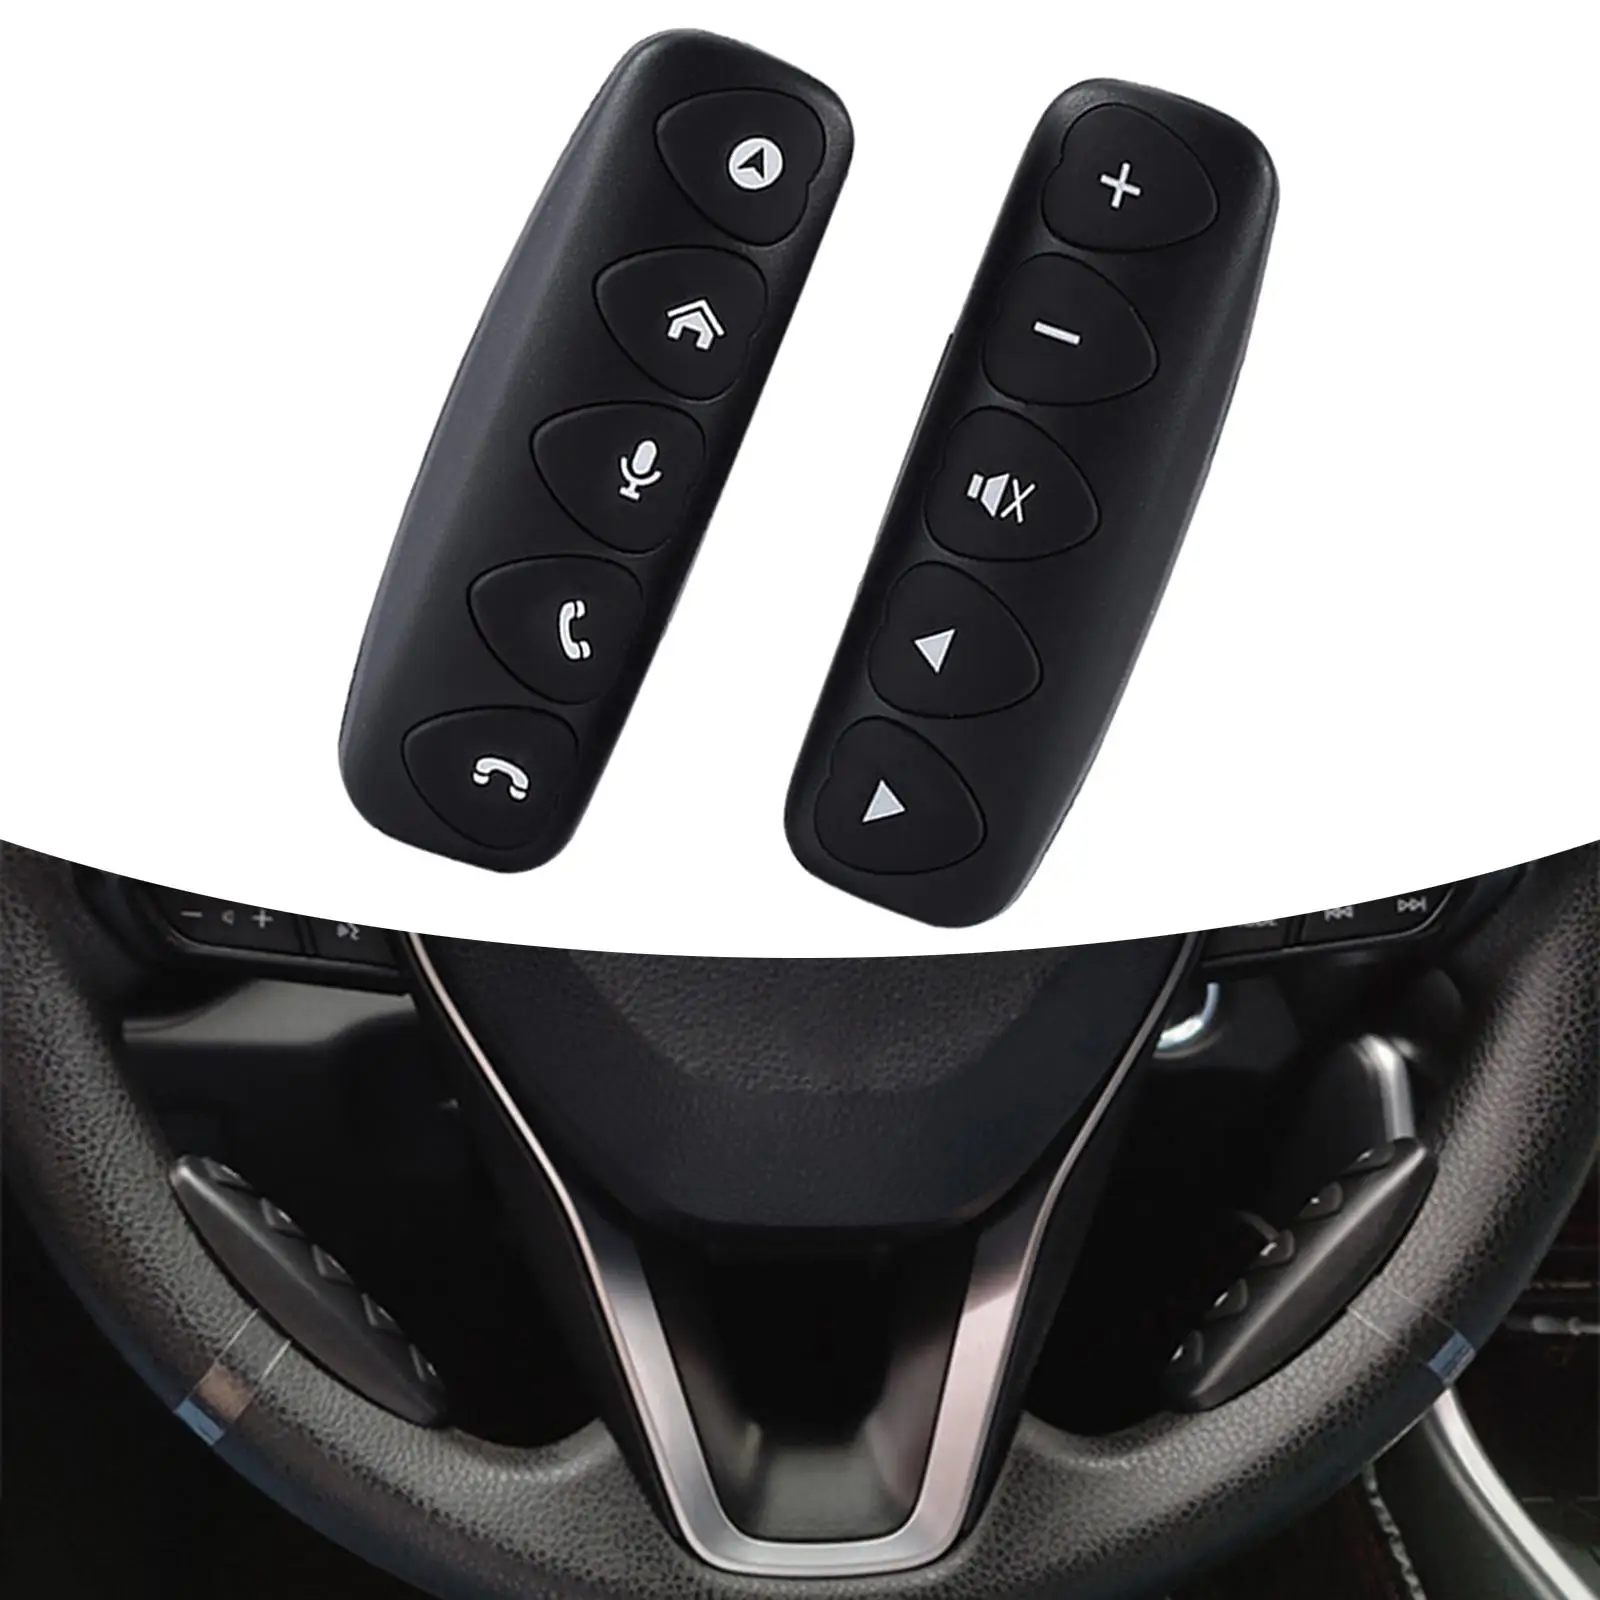 Steering Wheel Controller Universal Backlight Remote for Car Radio